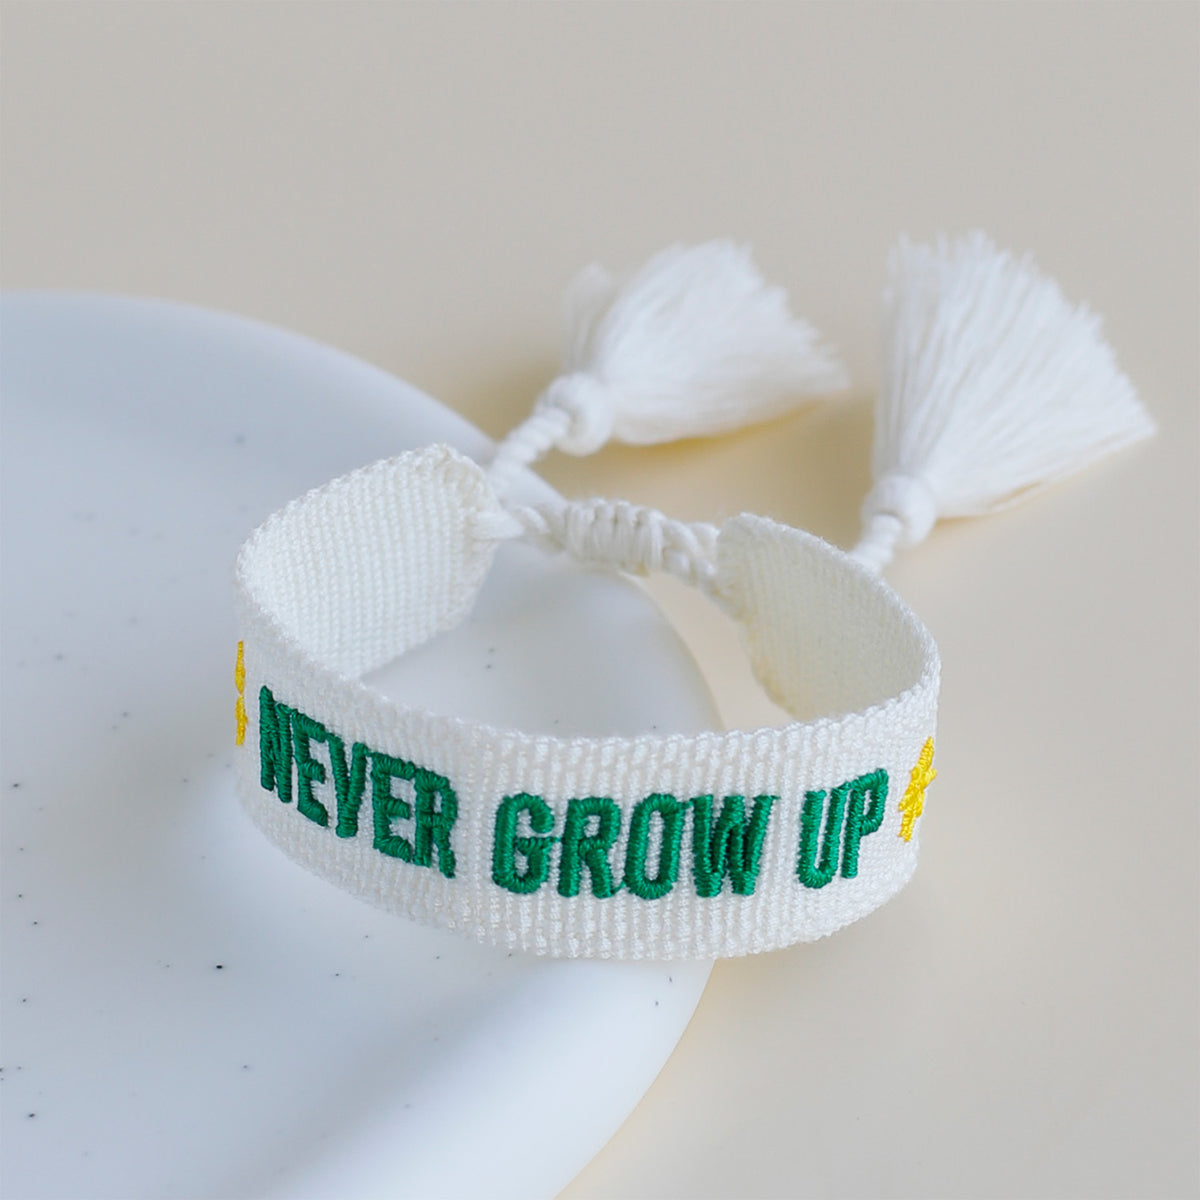 disney-parks-fan-woven-tassel-bracelet-never-grow-up-white-green-embroidery